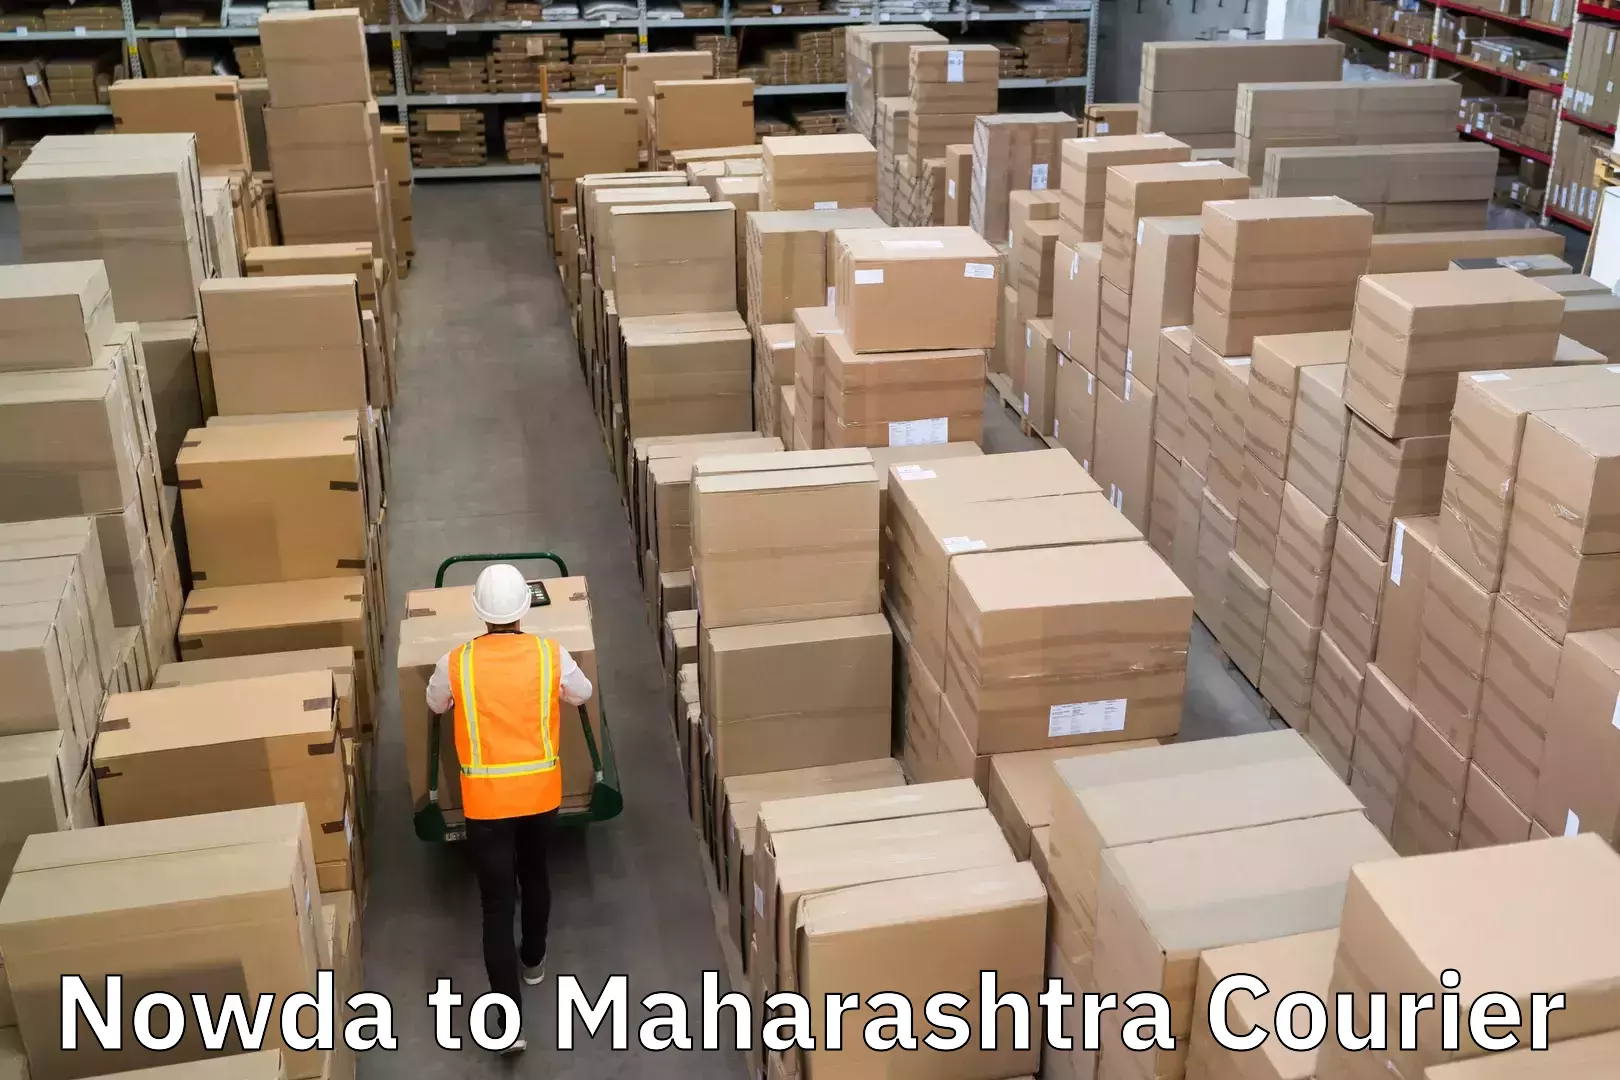 Efficient order fulfillment Nowda to Maharashtra